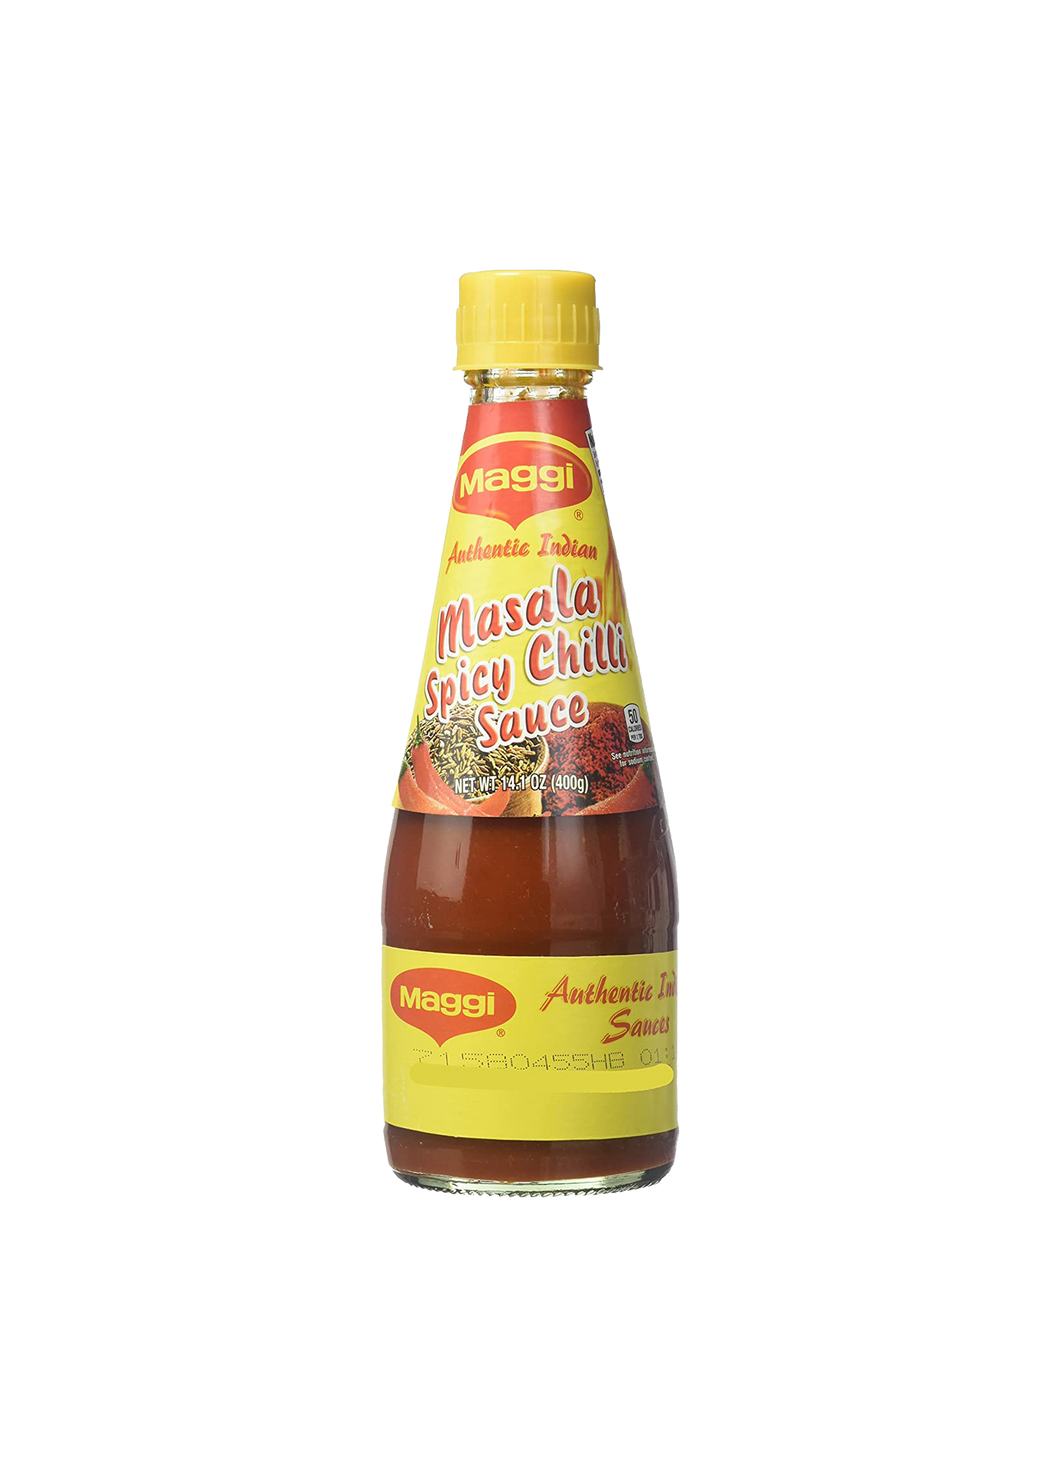 Maggi Masala Spicy Chilli Sauce 400g